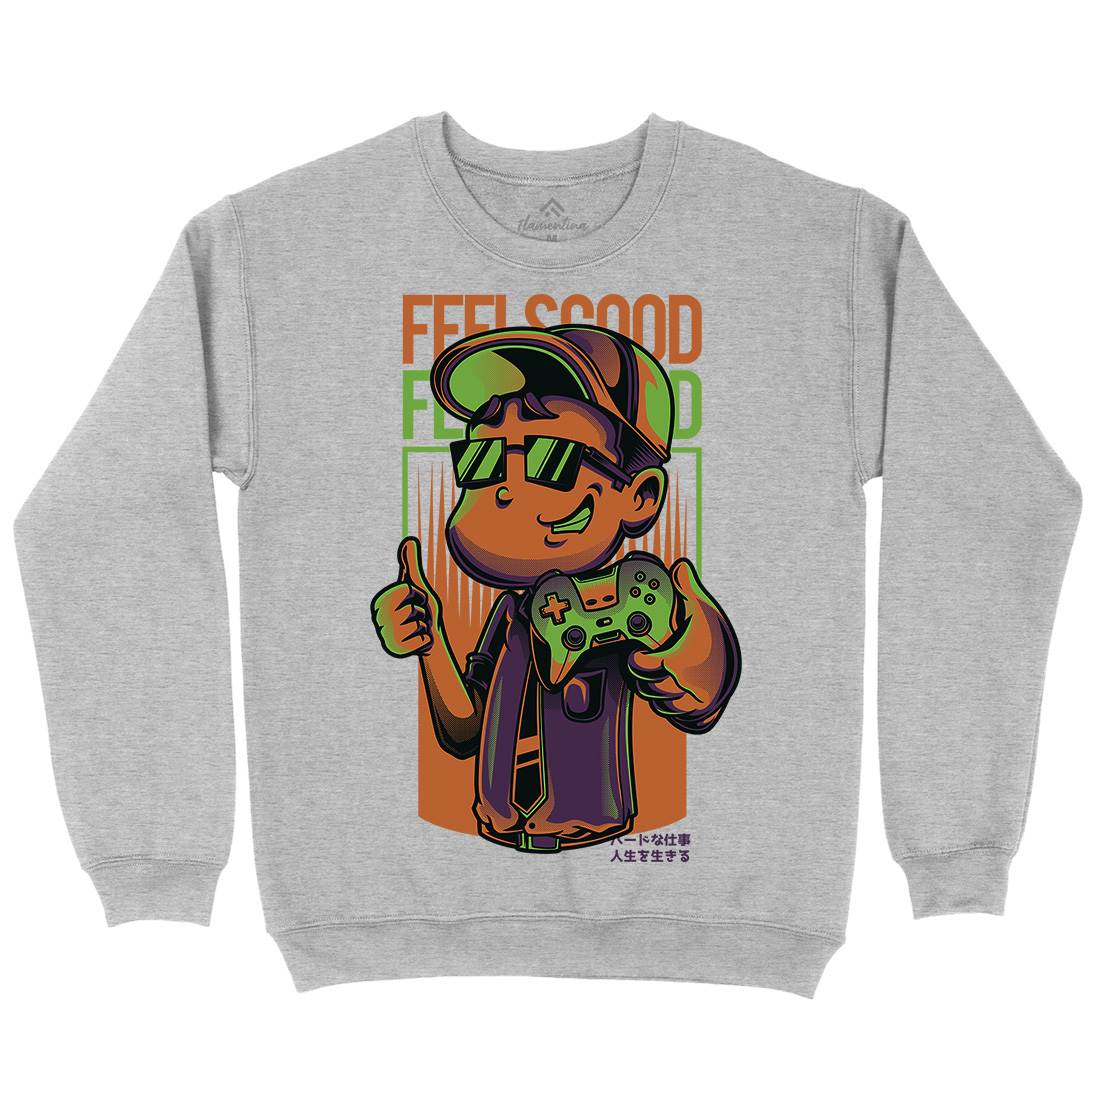 Feels Good Mens Crew Neck Sweatshirt Geek D773